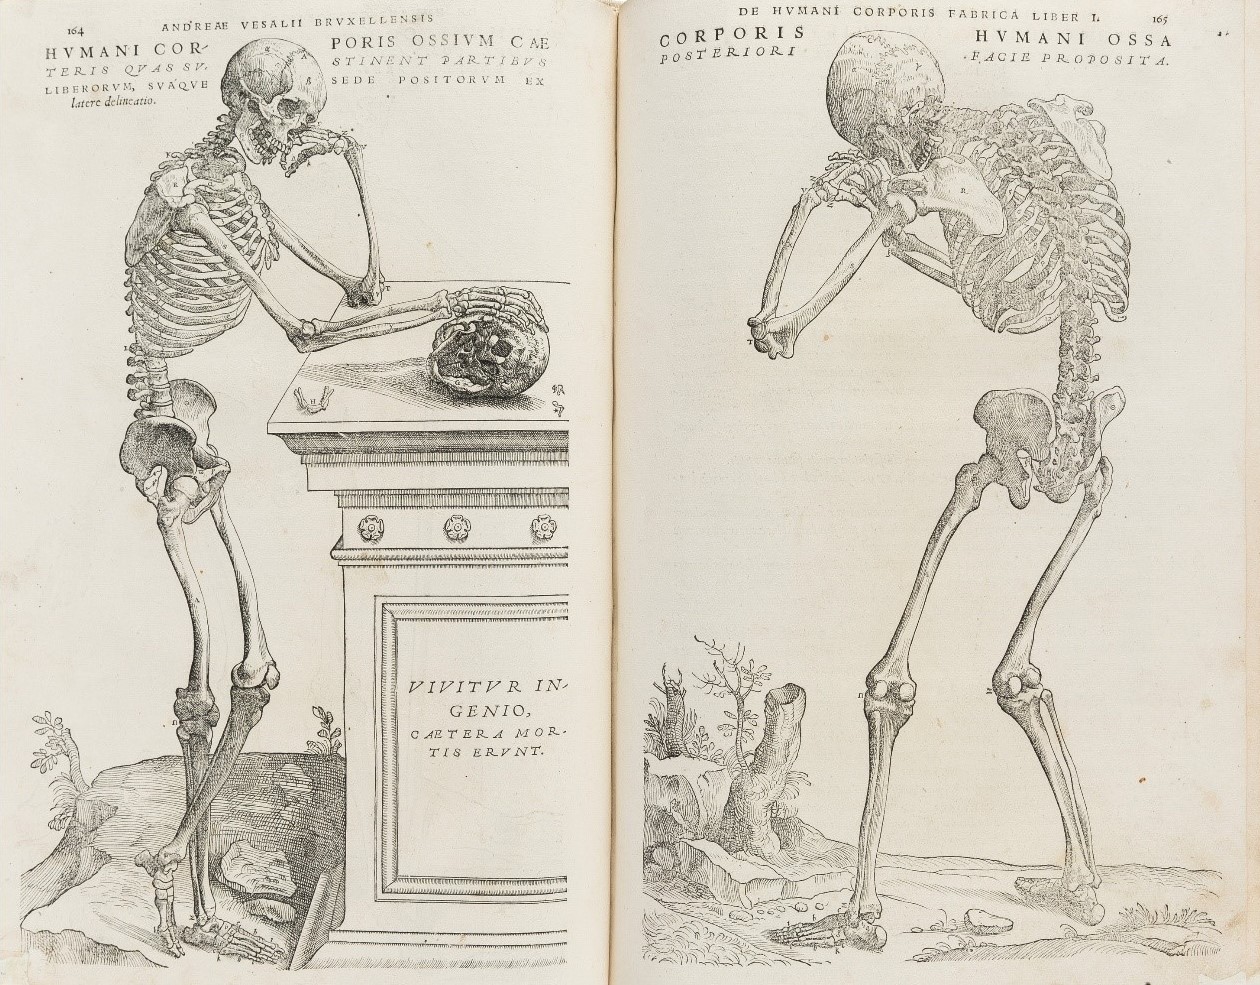 corpo humano - vida e morte - humani corporis